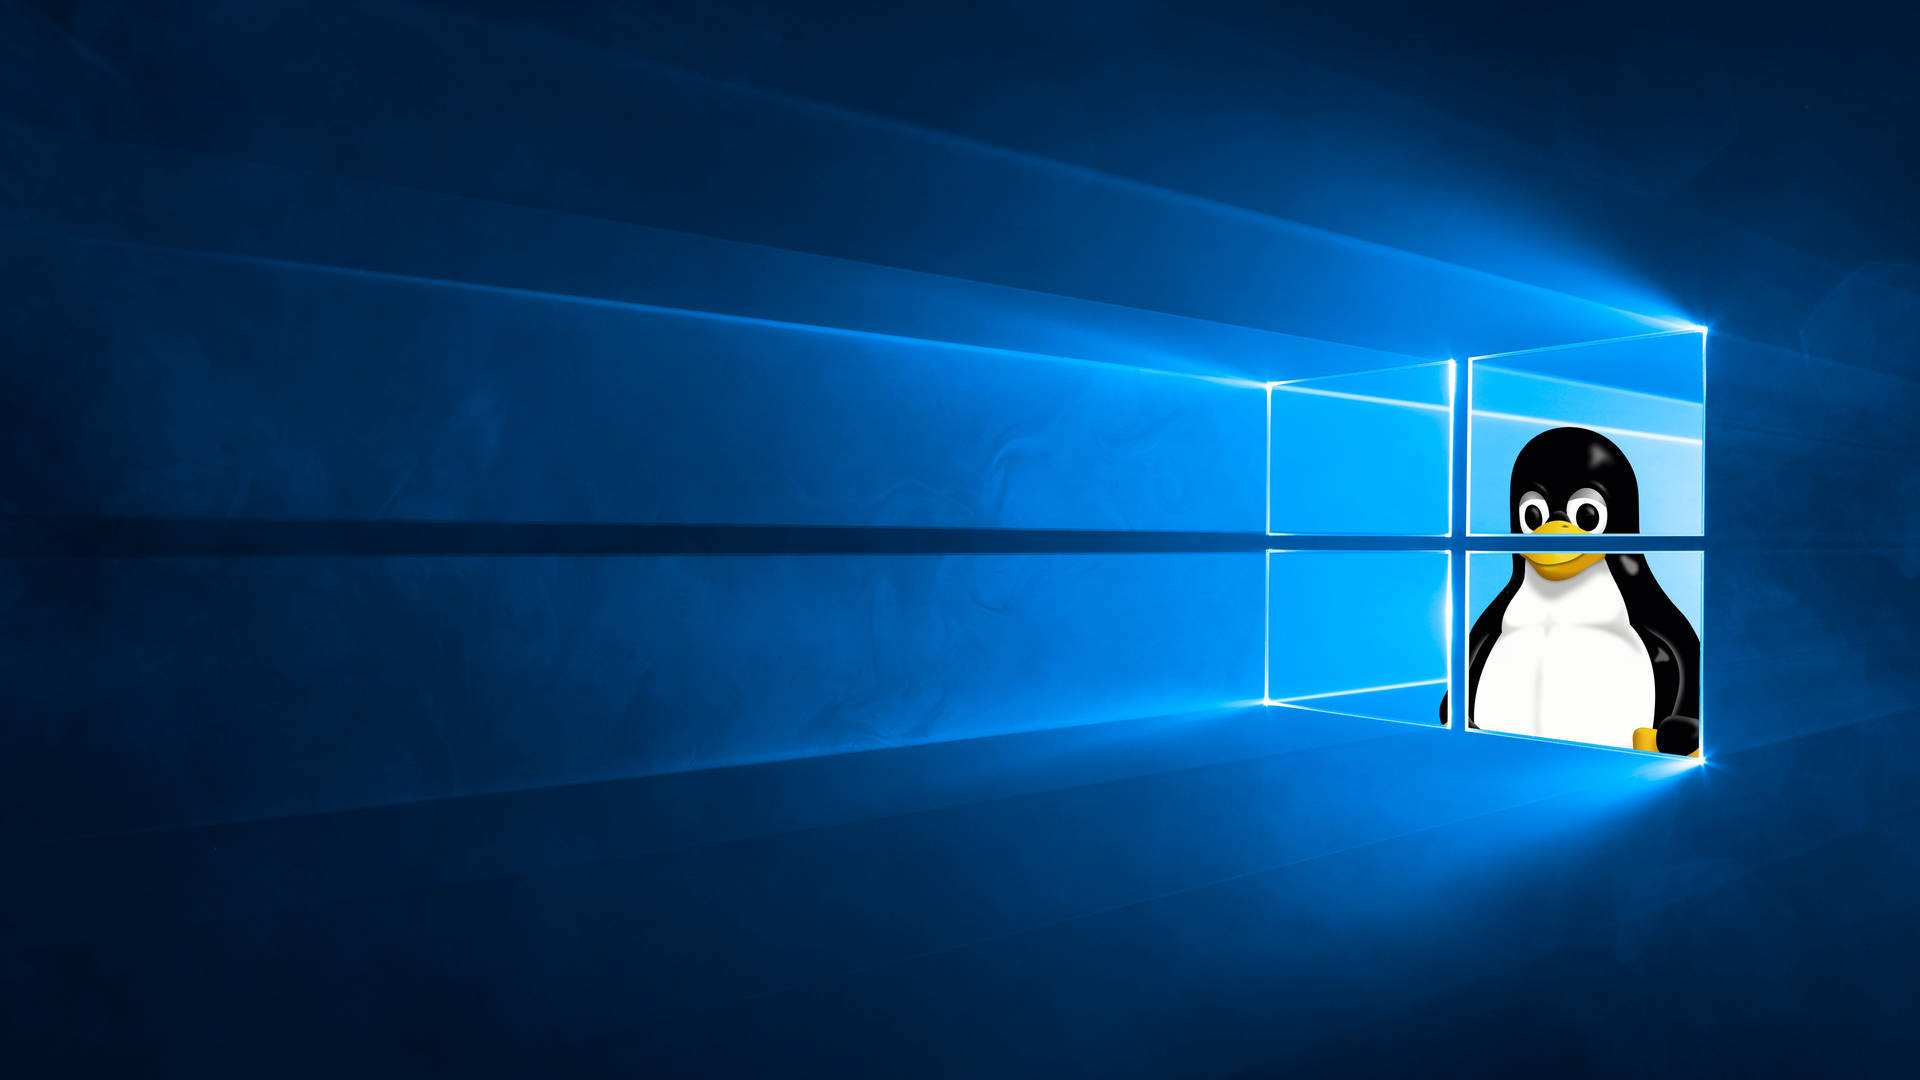 Penguin Themed Lock Screen Wallpaper With Blue Windows Backdrop